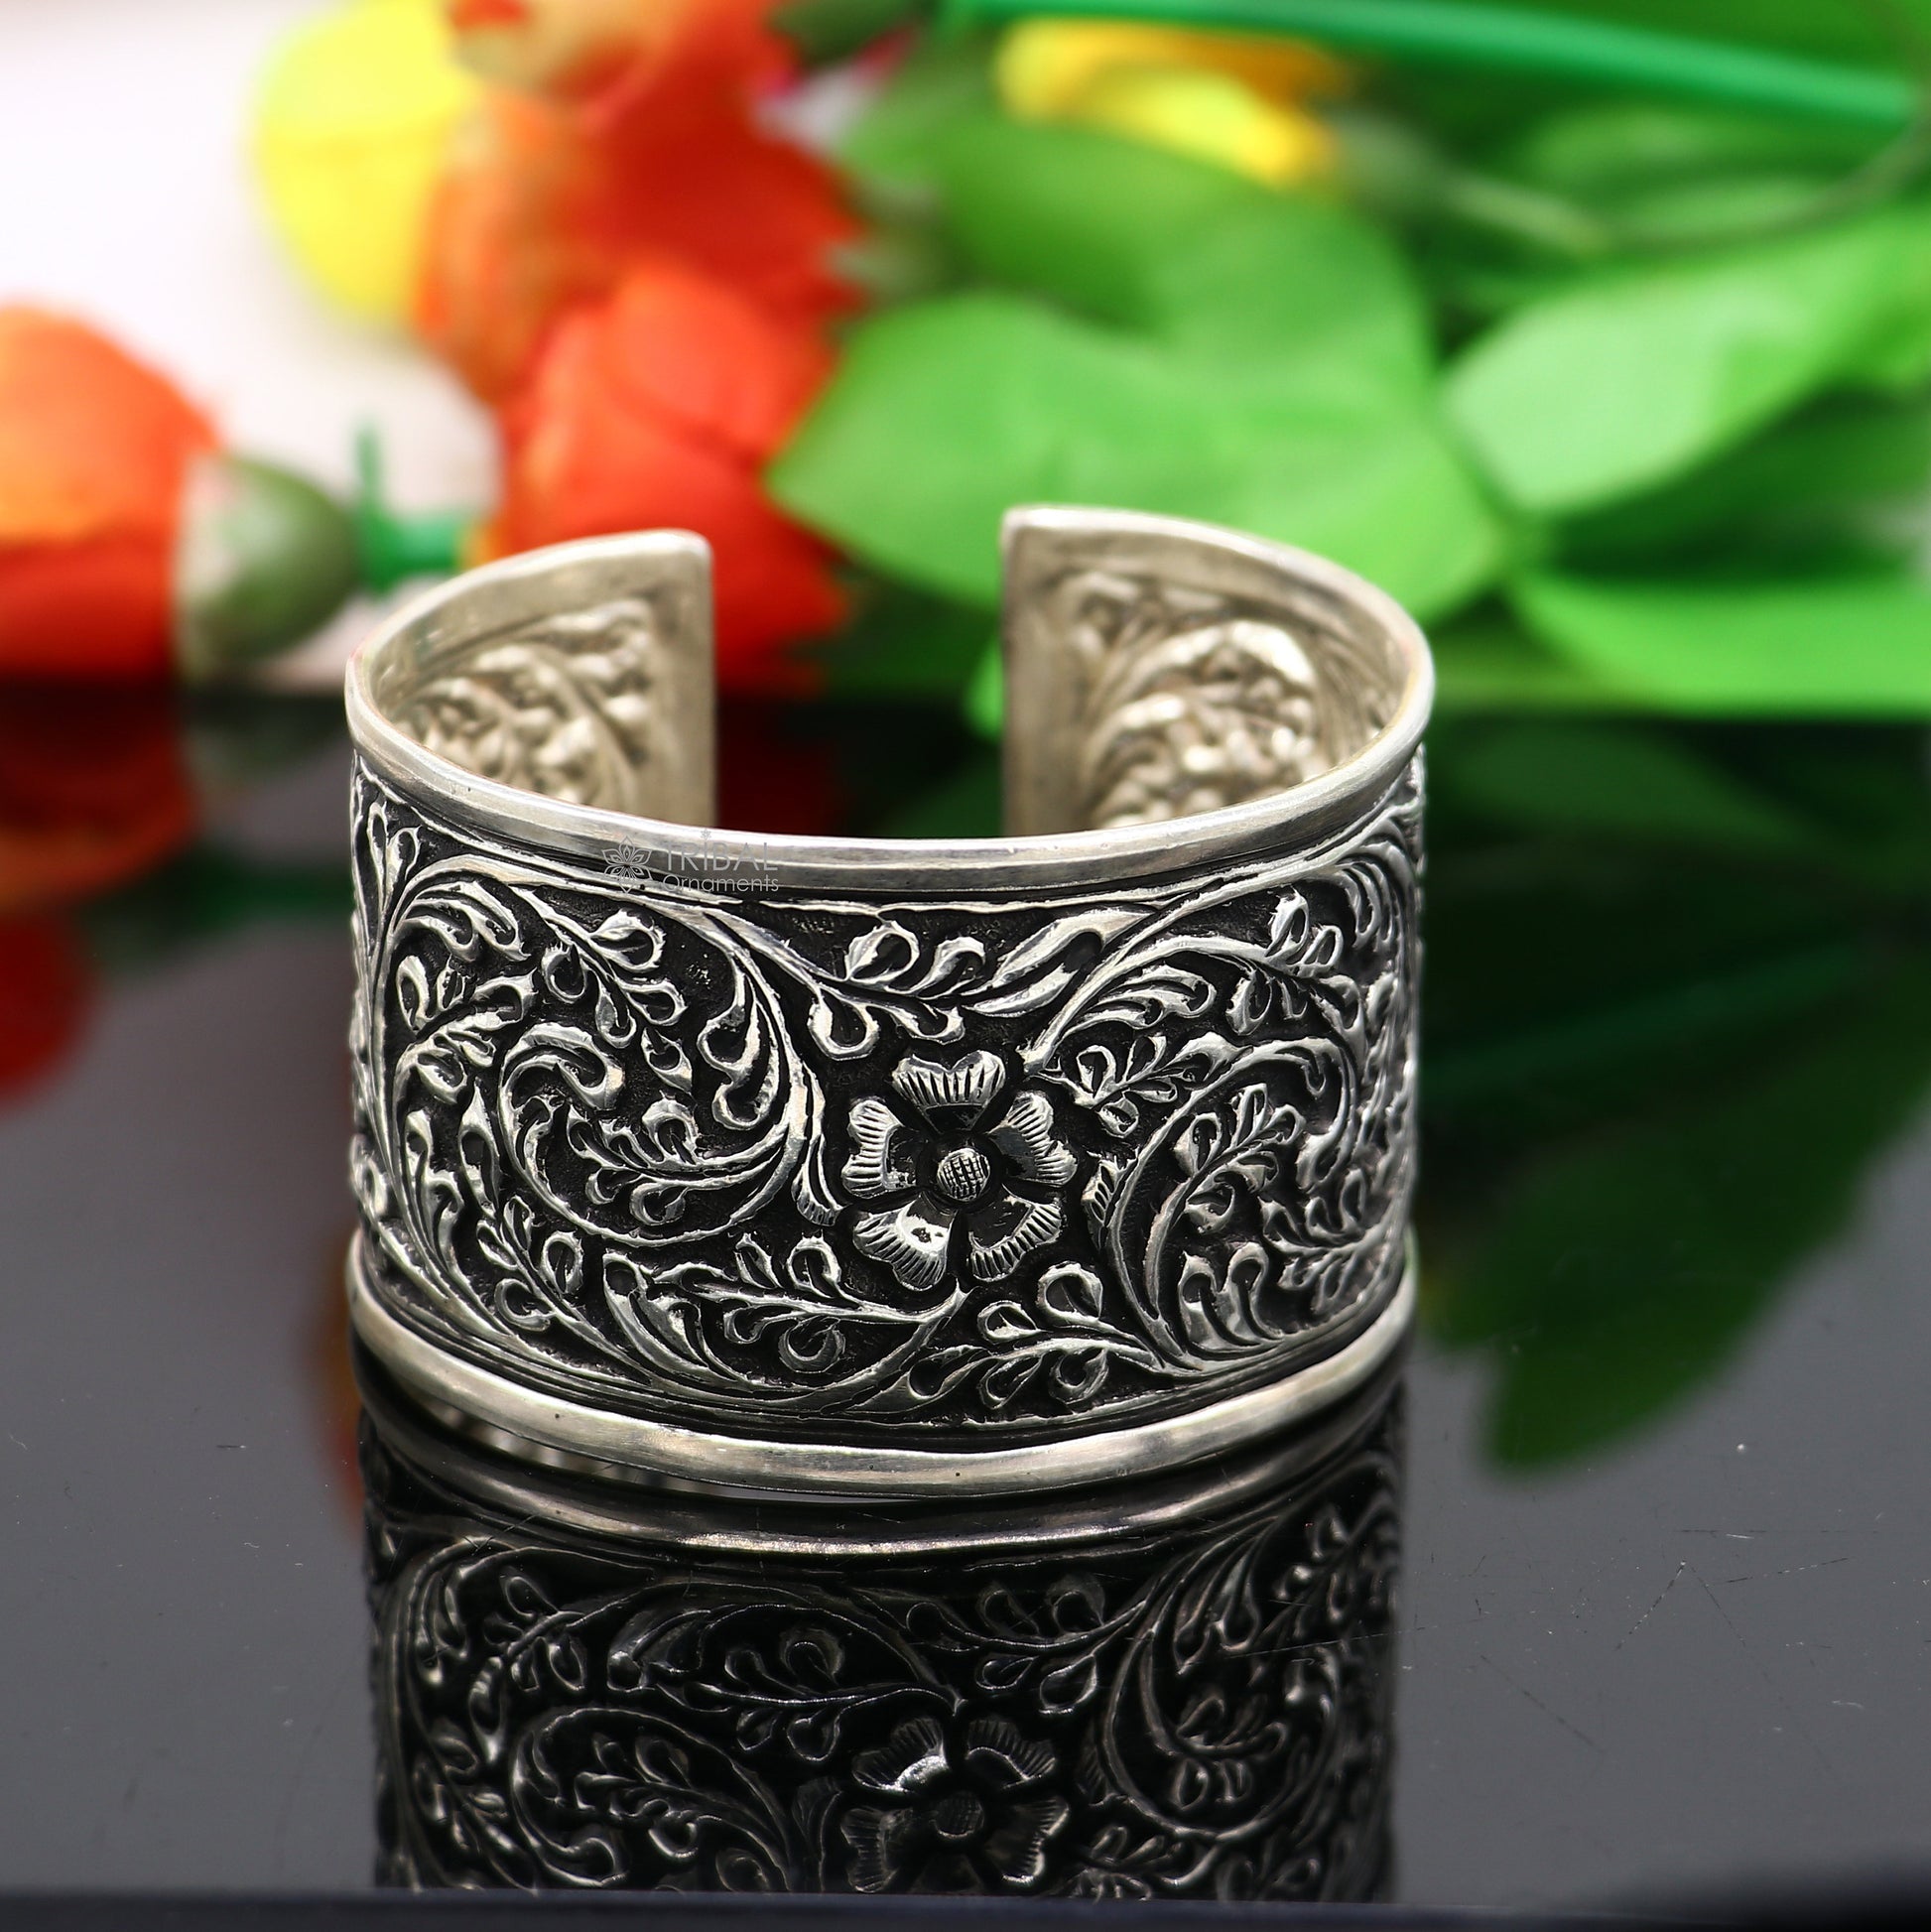 925 sterling silver adjustable tribal cuff bracelet, excellent wedding cuff bangle bracelet Tribal ethnic boho Navratri jewelry cuff189 - TRIBAL ORNAMENTS